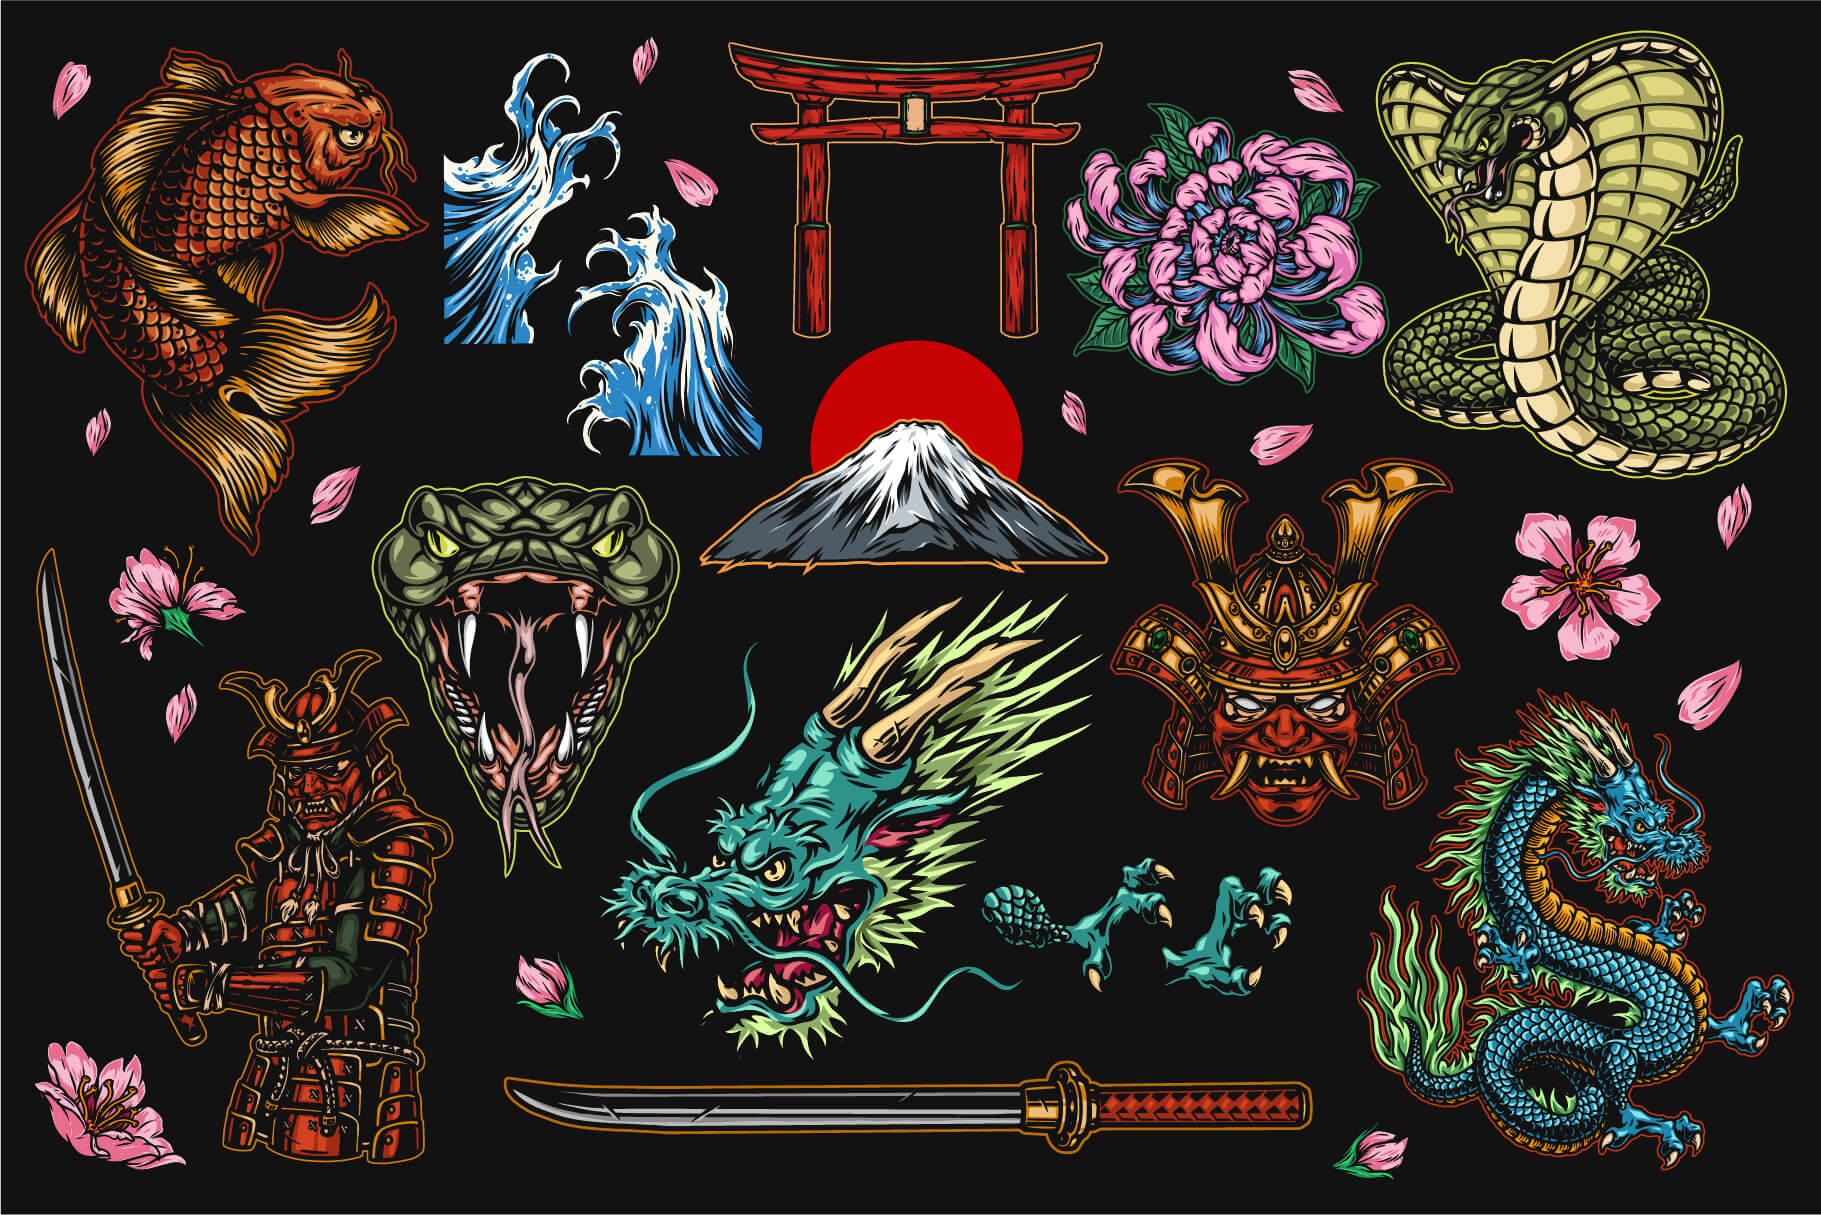 Samurai illustrations bundle of 13 vector images